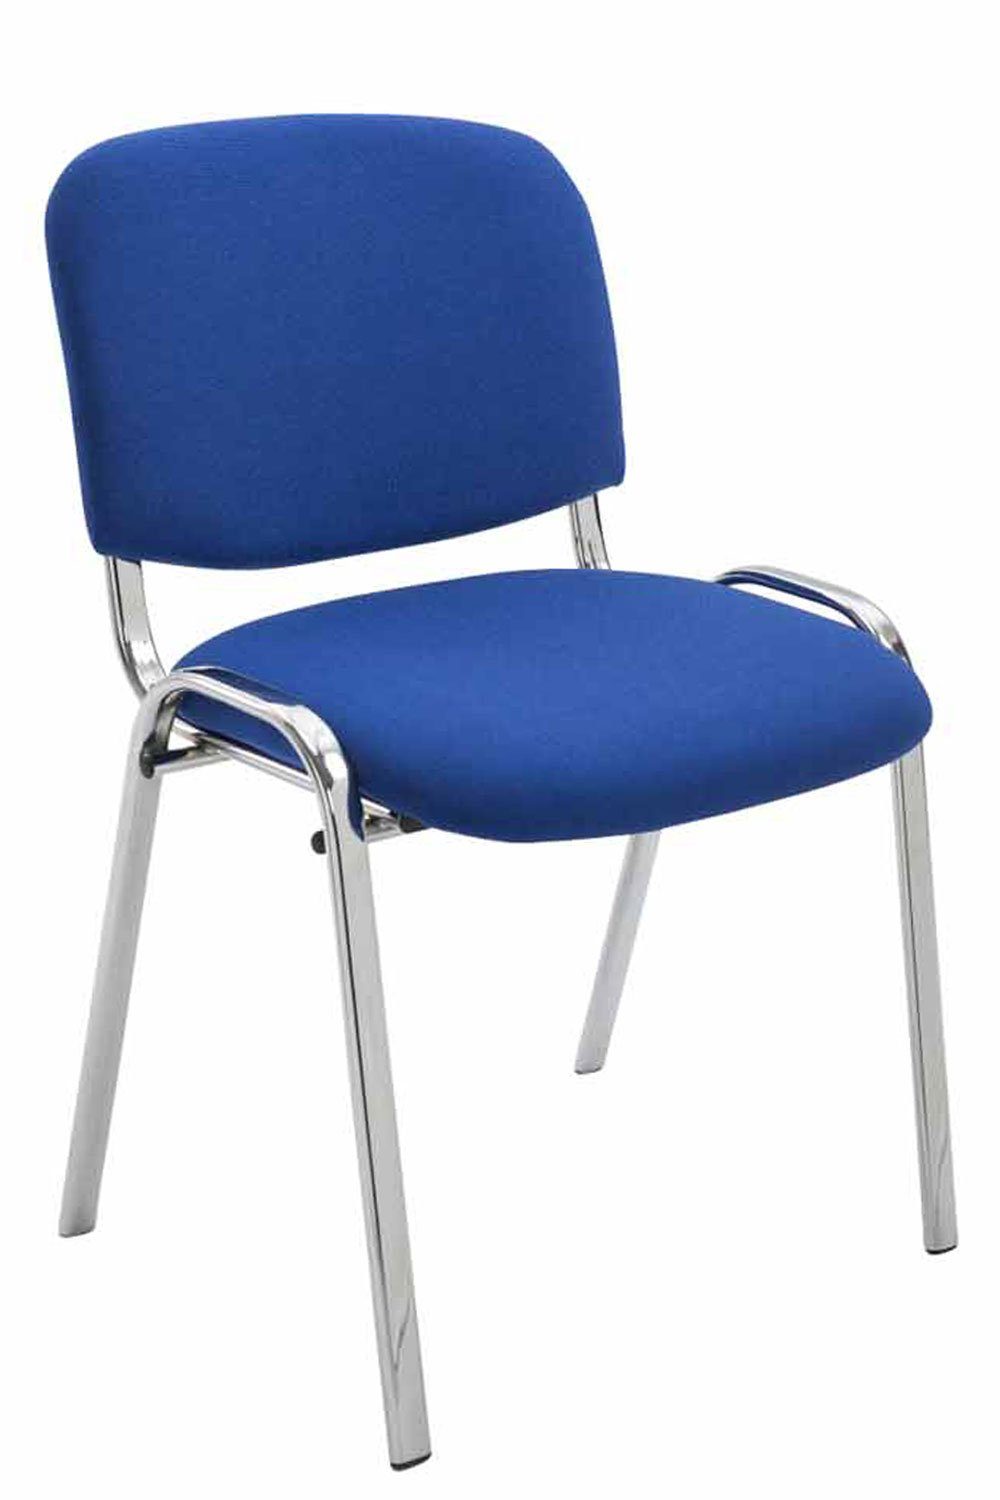 Stoff Messestuhl), Sitzfläche: Metall Besucherstuhl - Keen - TPFLiving - (Besprechungsstuhl - chrom Konferenzstuhl Gestell: hochwertiger blau Warteraumstuhl mit Polsterung